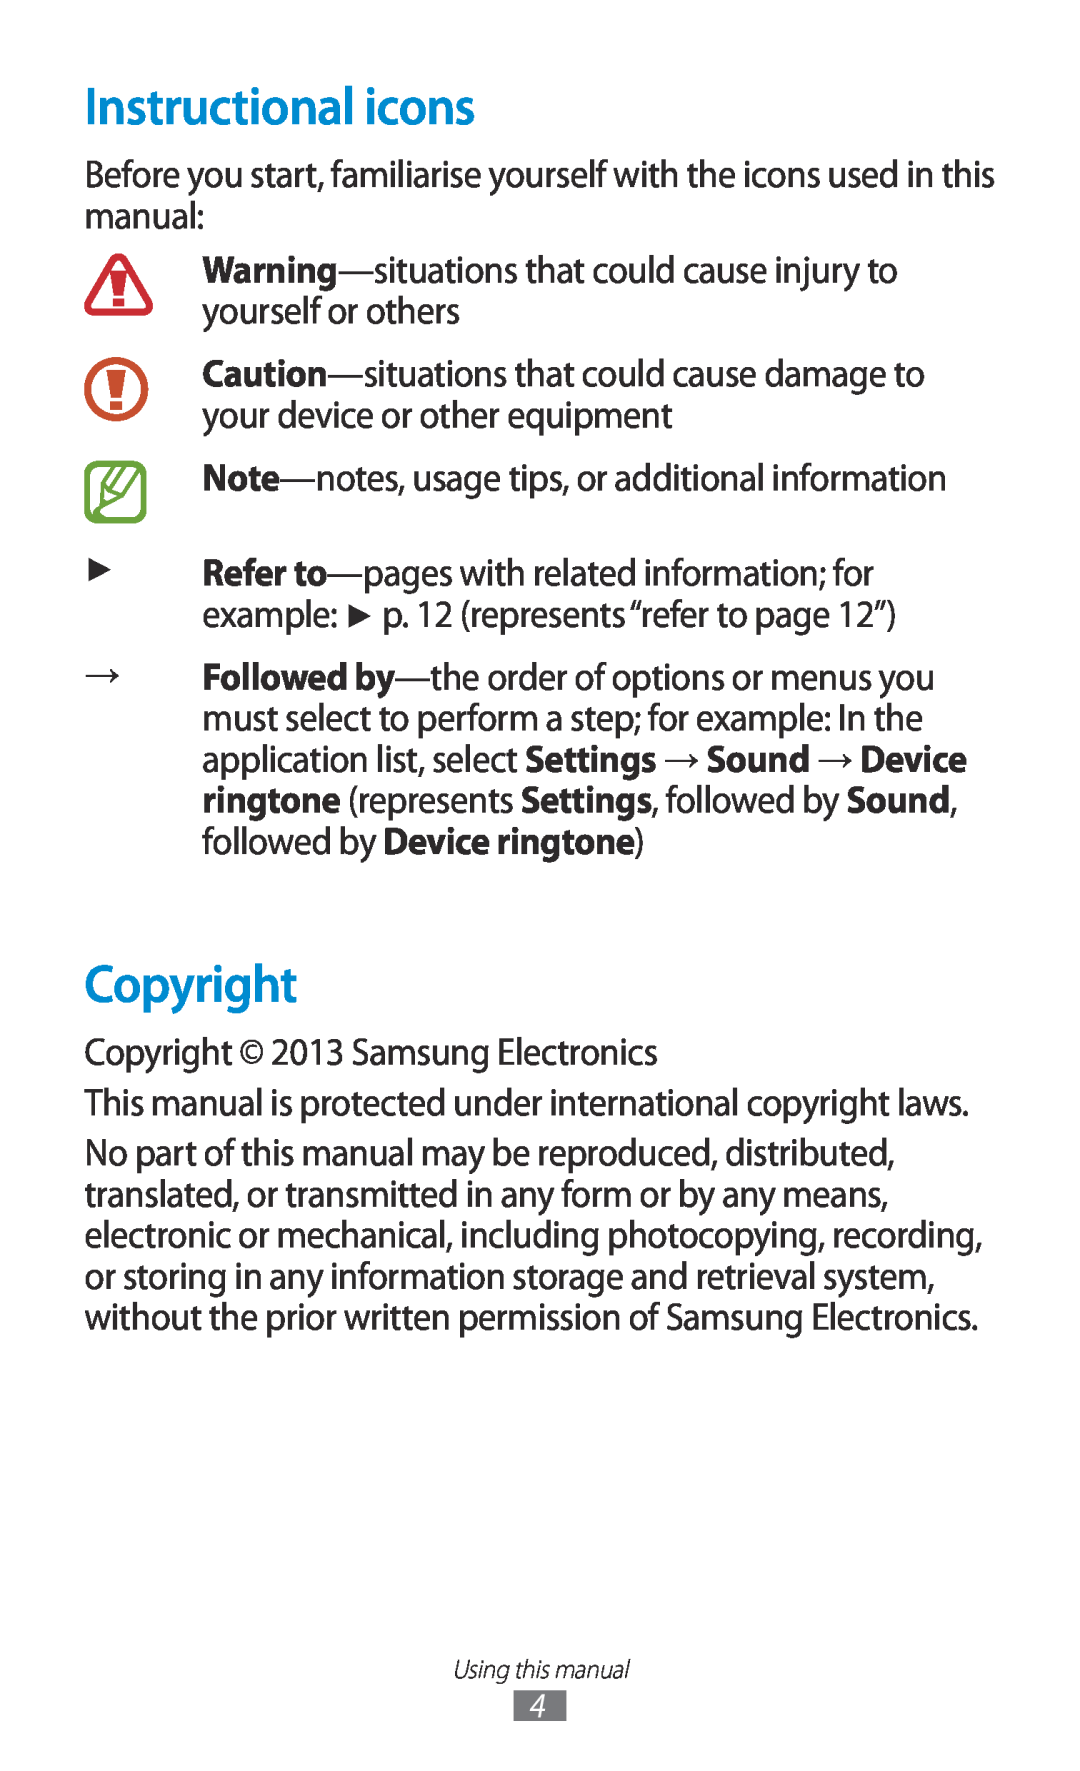 Samsung GT-I8160OKAEUR, GT-I8160ZWADBT, GT-I8160OKAEPL, GT-I8160OKAXEO, GT-I8160OKATUR manual Instructional icons, Copyright 